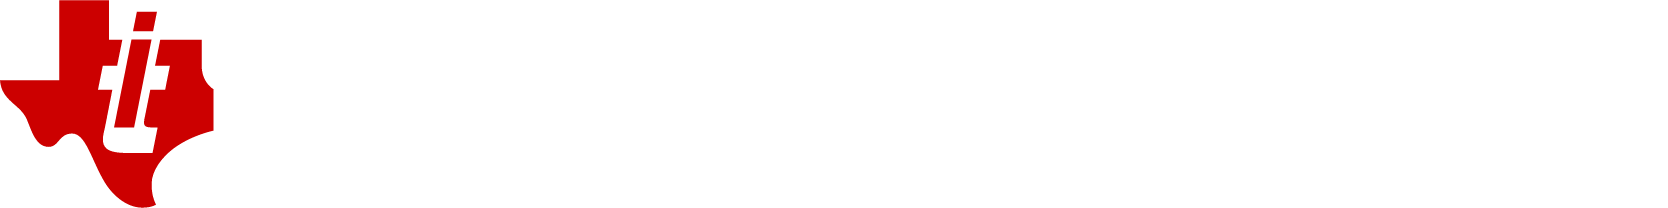 Texas Instruments logo large for dark backgrounds (transparent PNG)